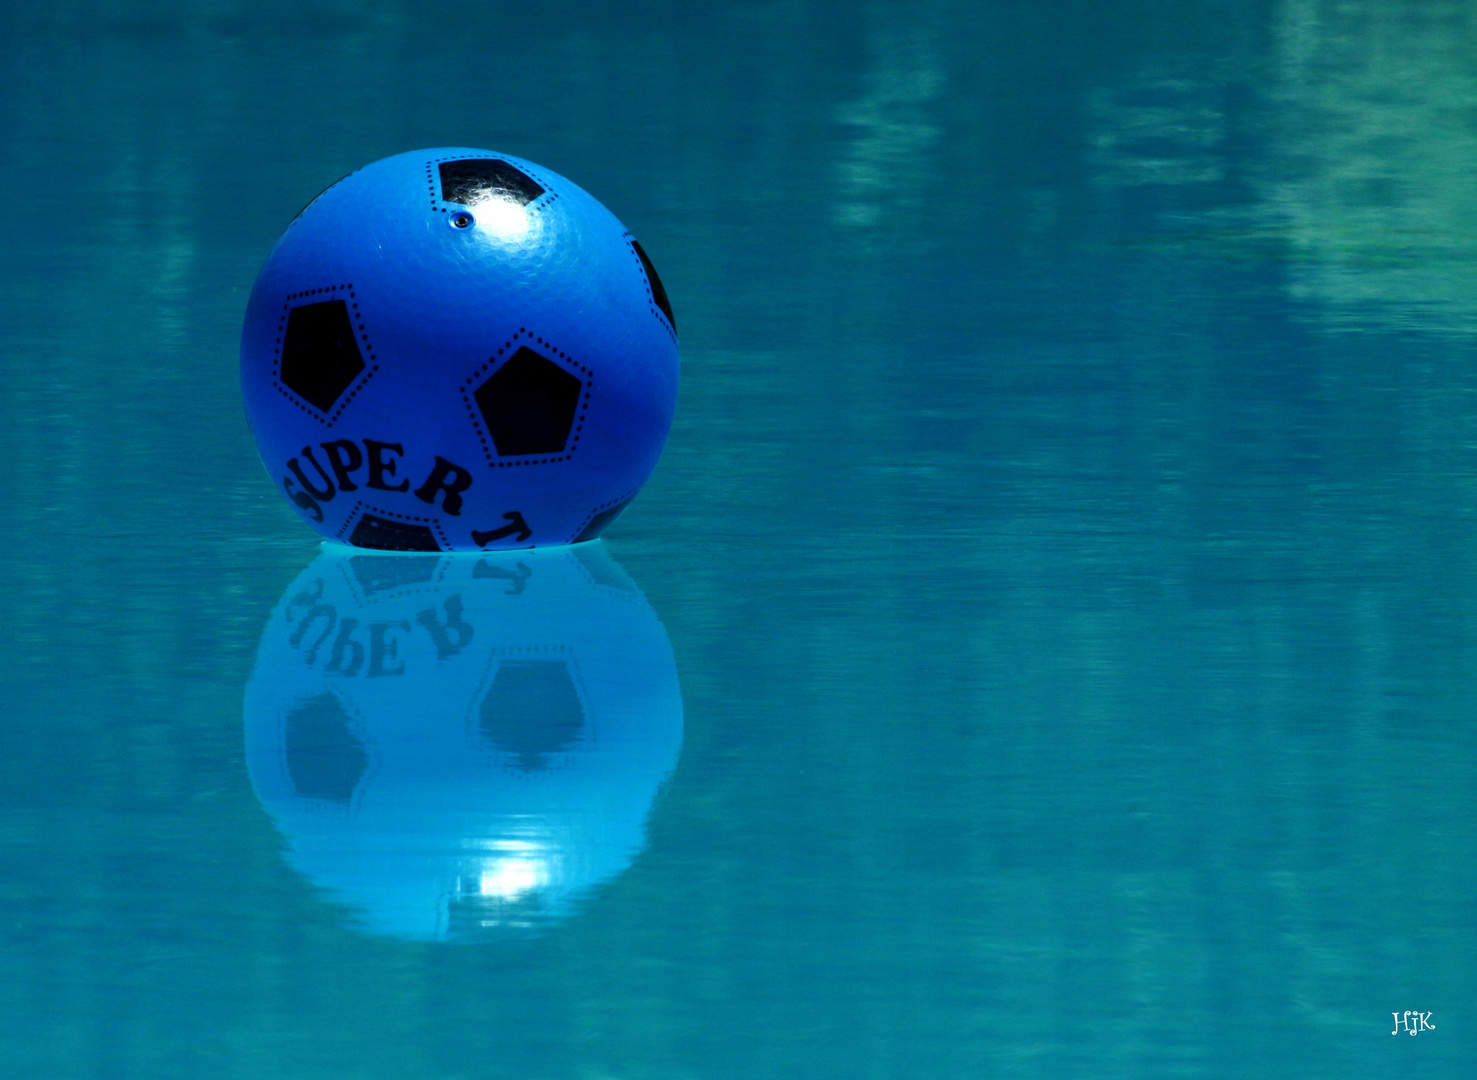 Ball im Pool